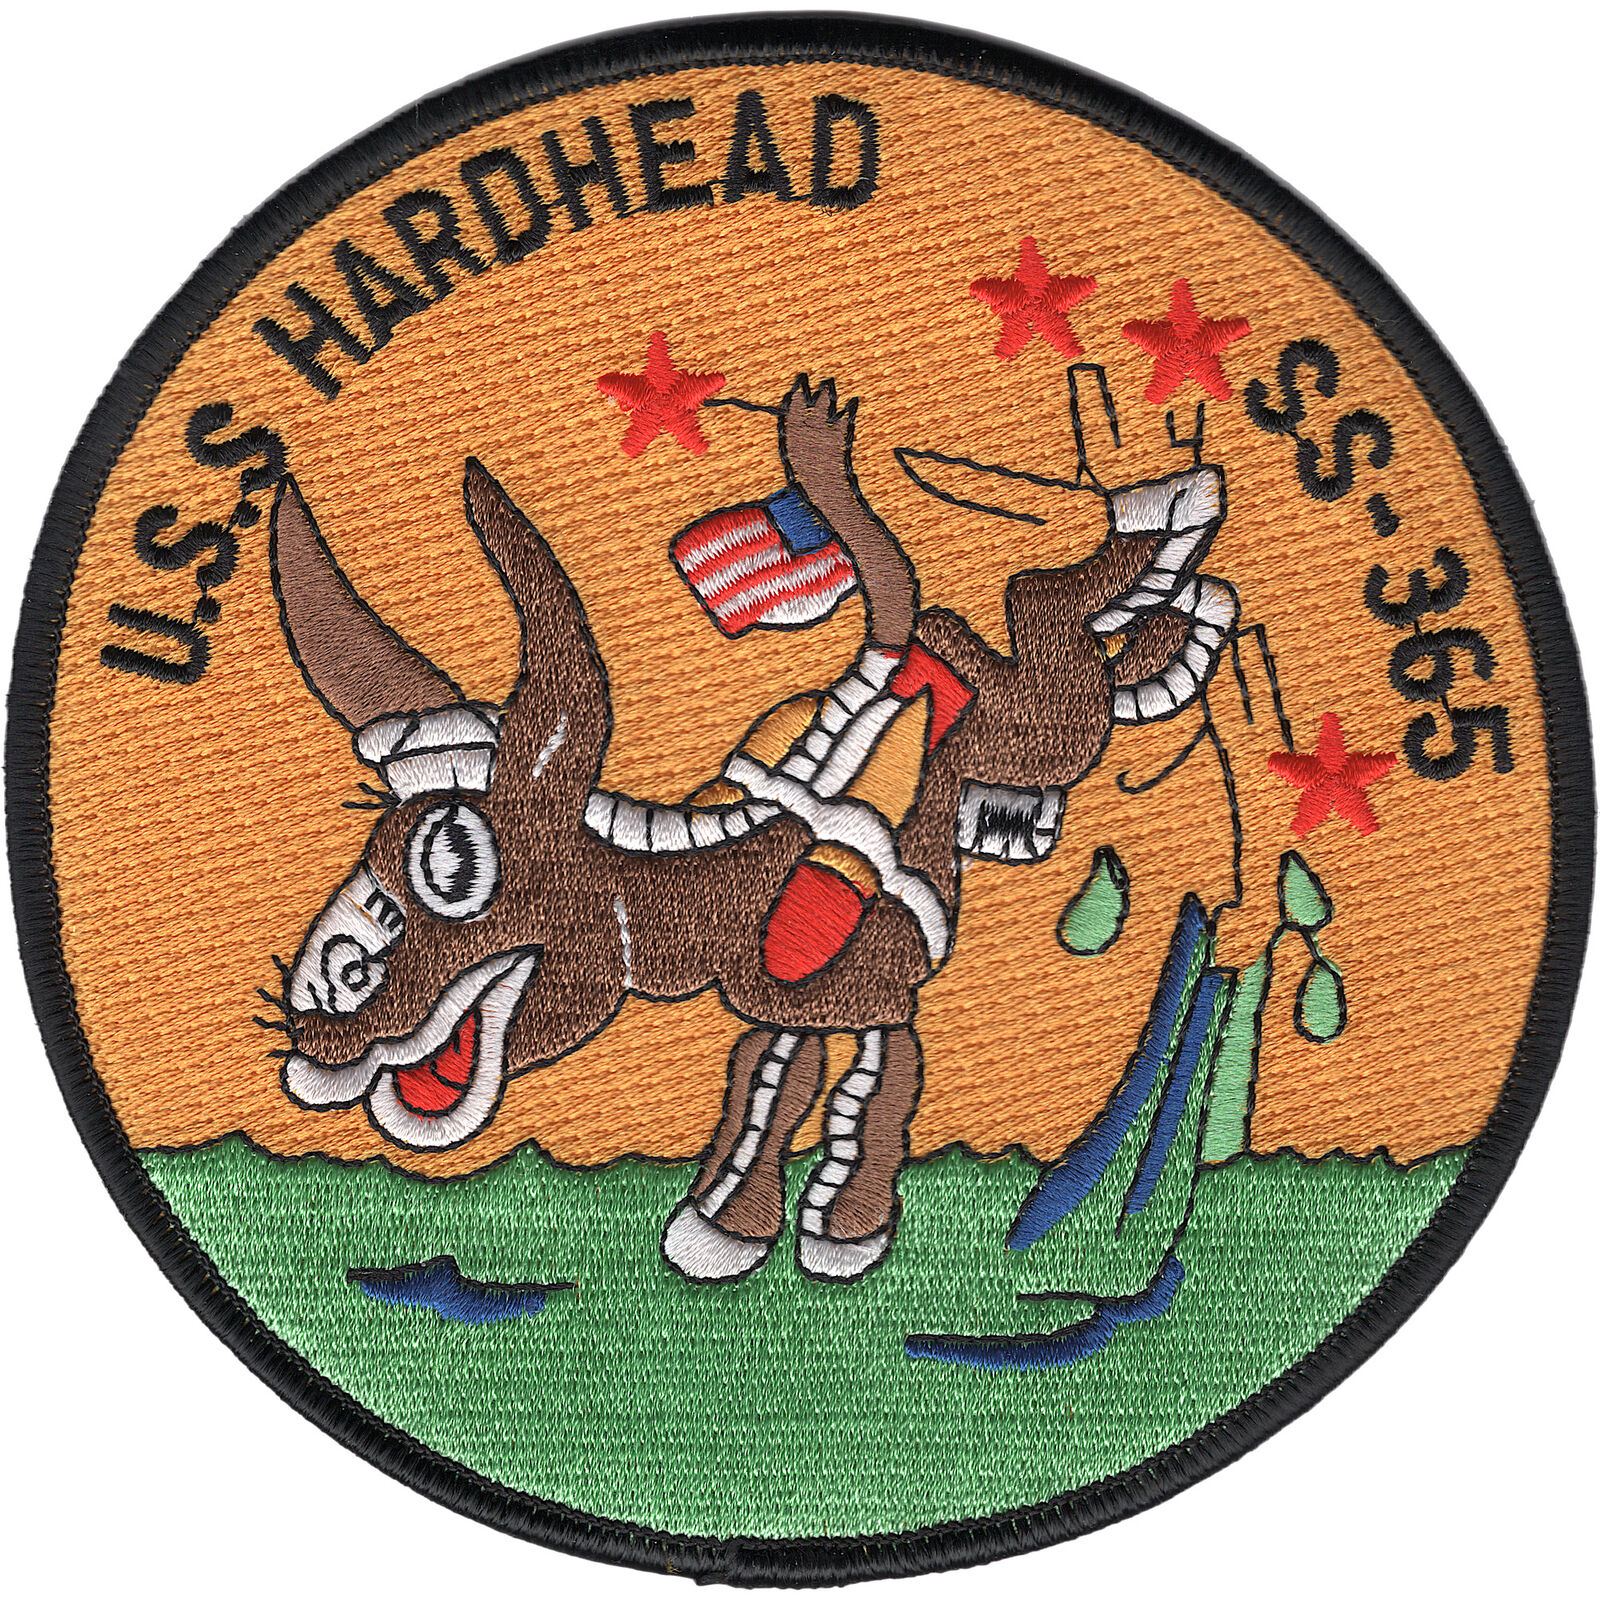 SS-365 USS Hardhead Patch - Large